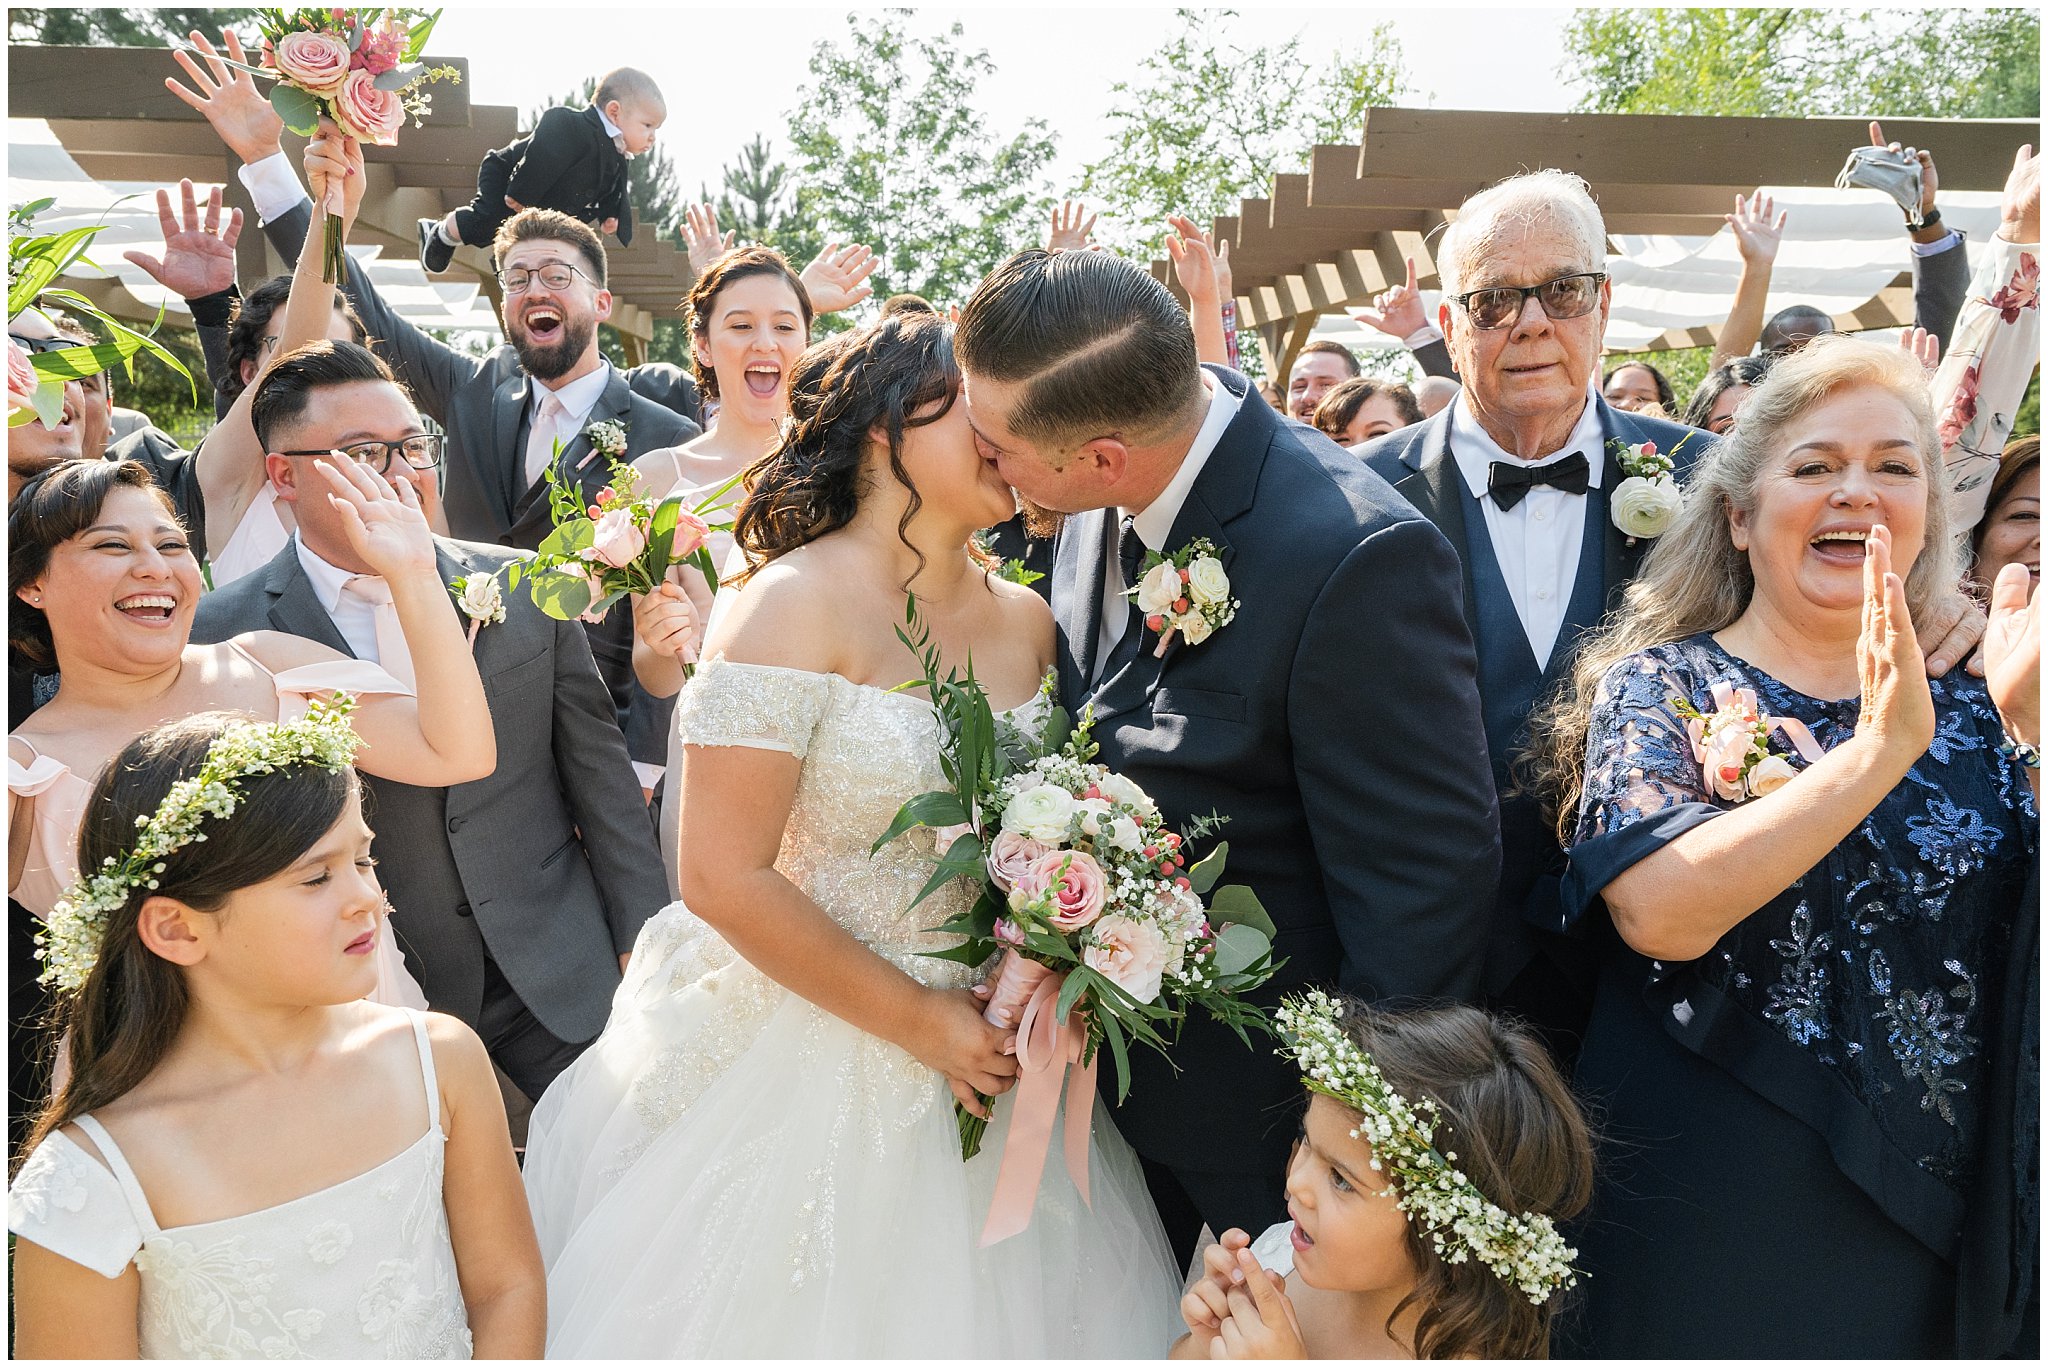 Utah mountain ceremony | Rustic Mountain Destination Wedding at Oak Hills Utah | Jessie and Dallin Photography